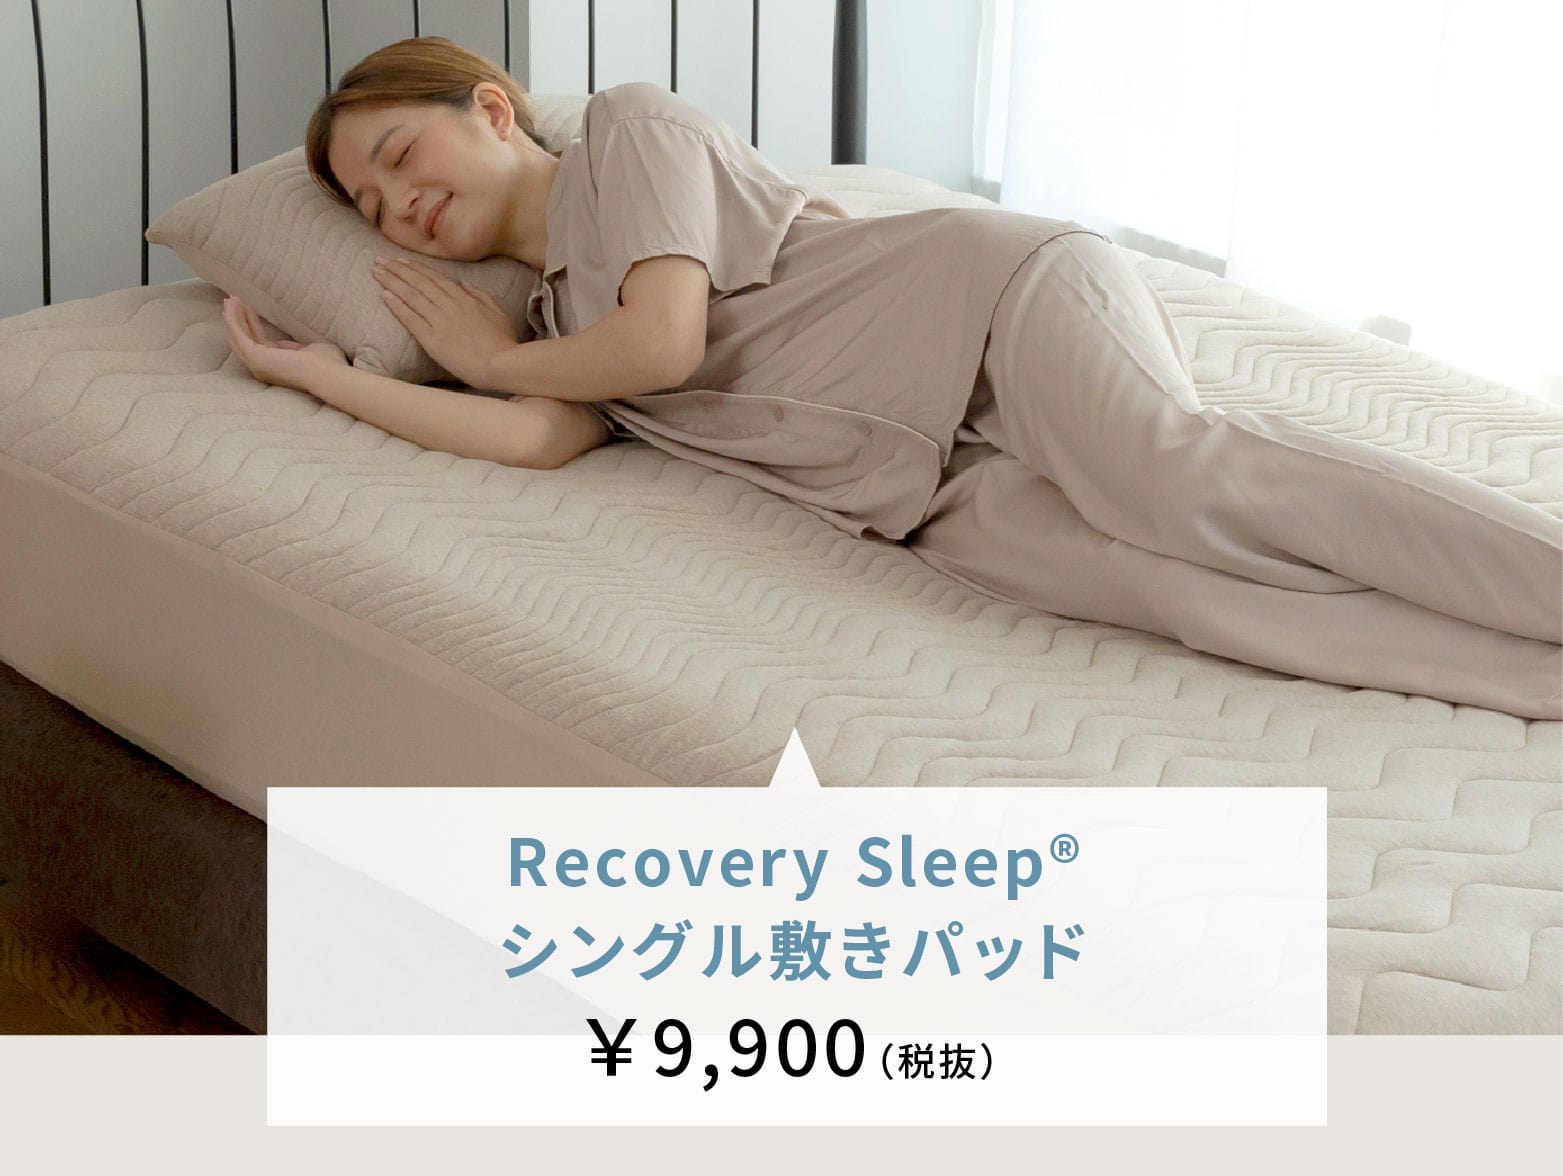 ecovery Sleep®シングル敷きパッド￥9,900(税抜)